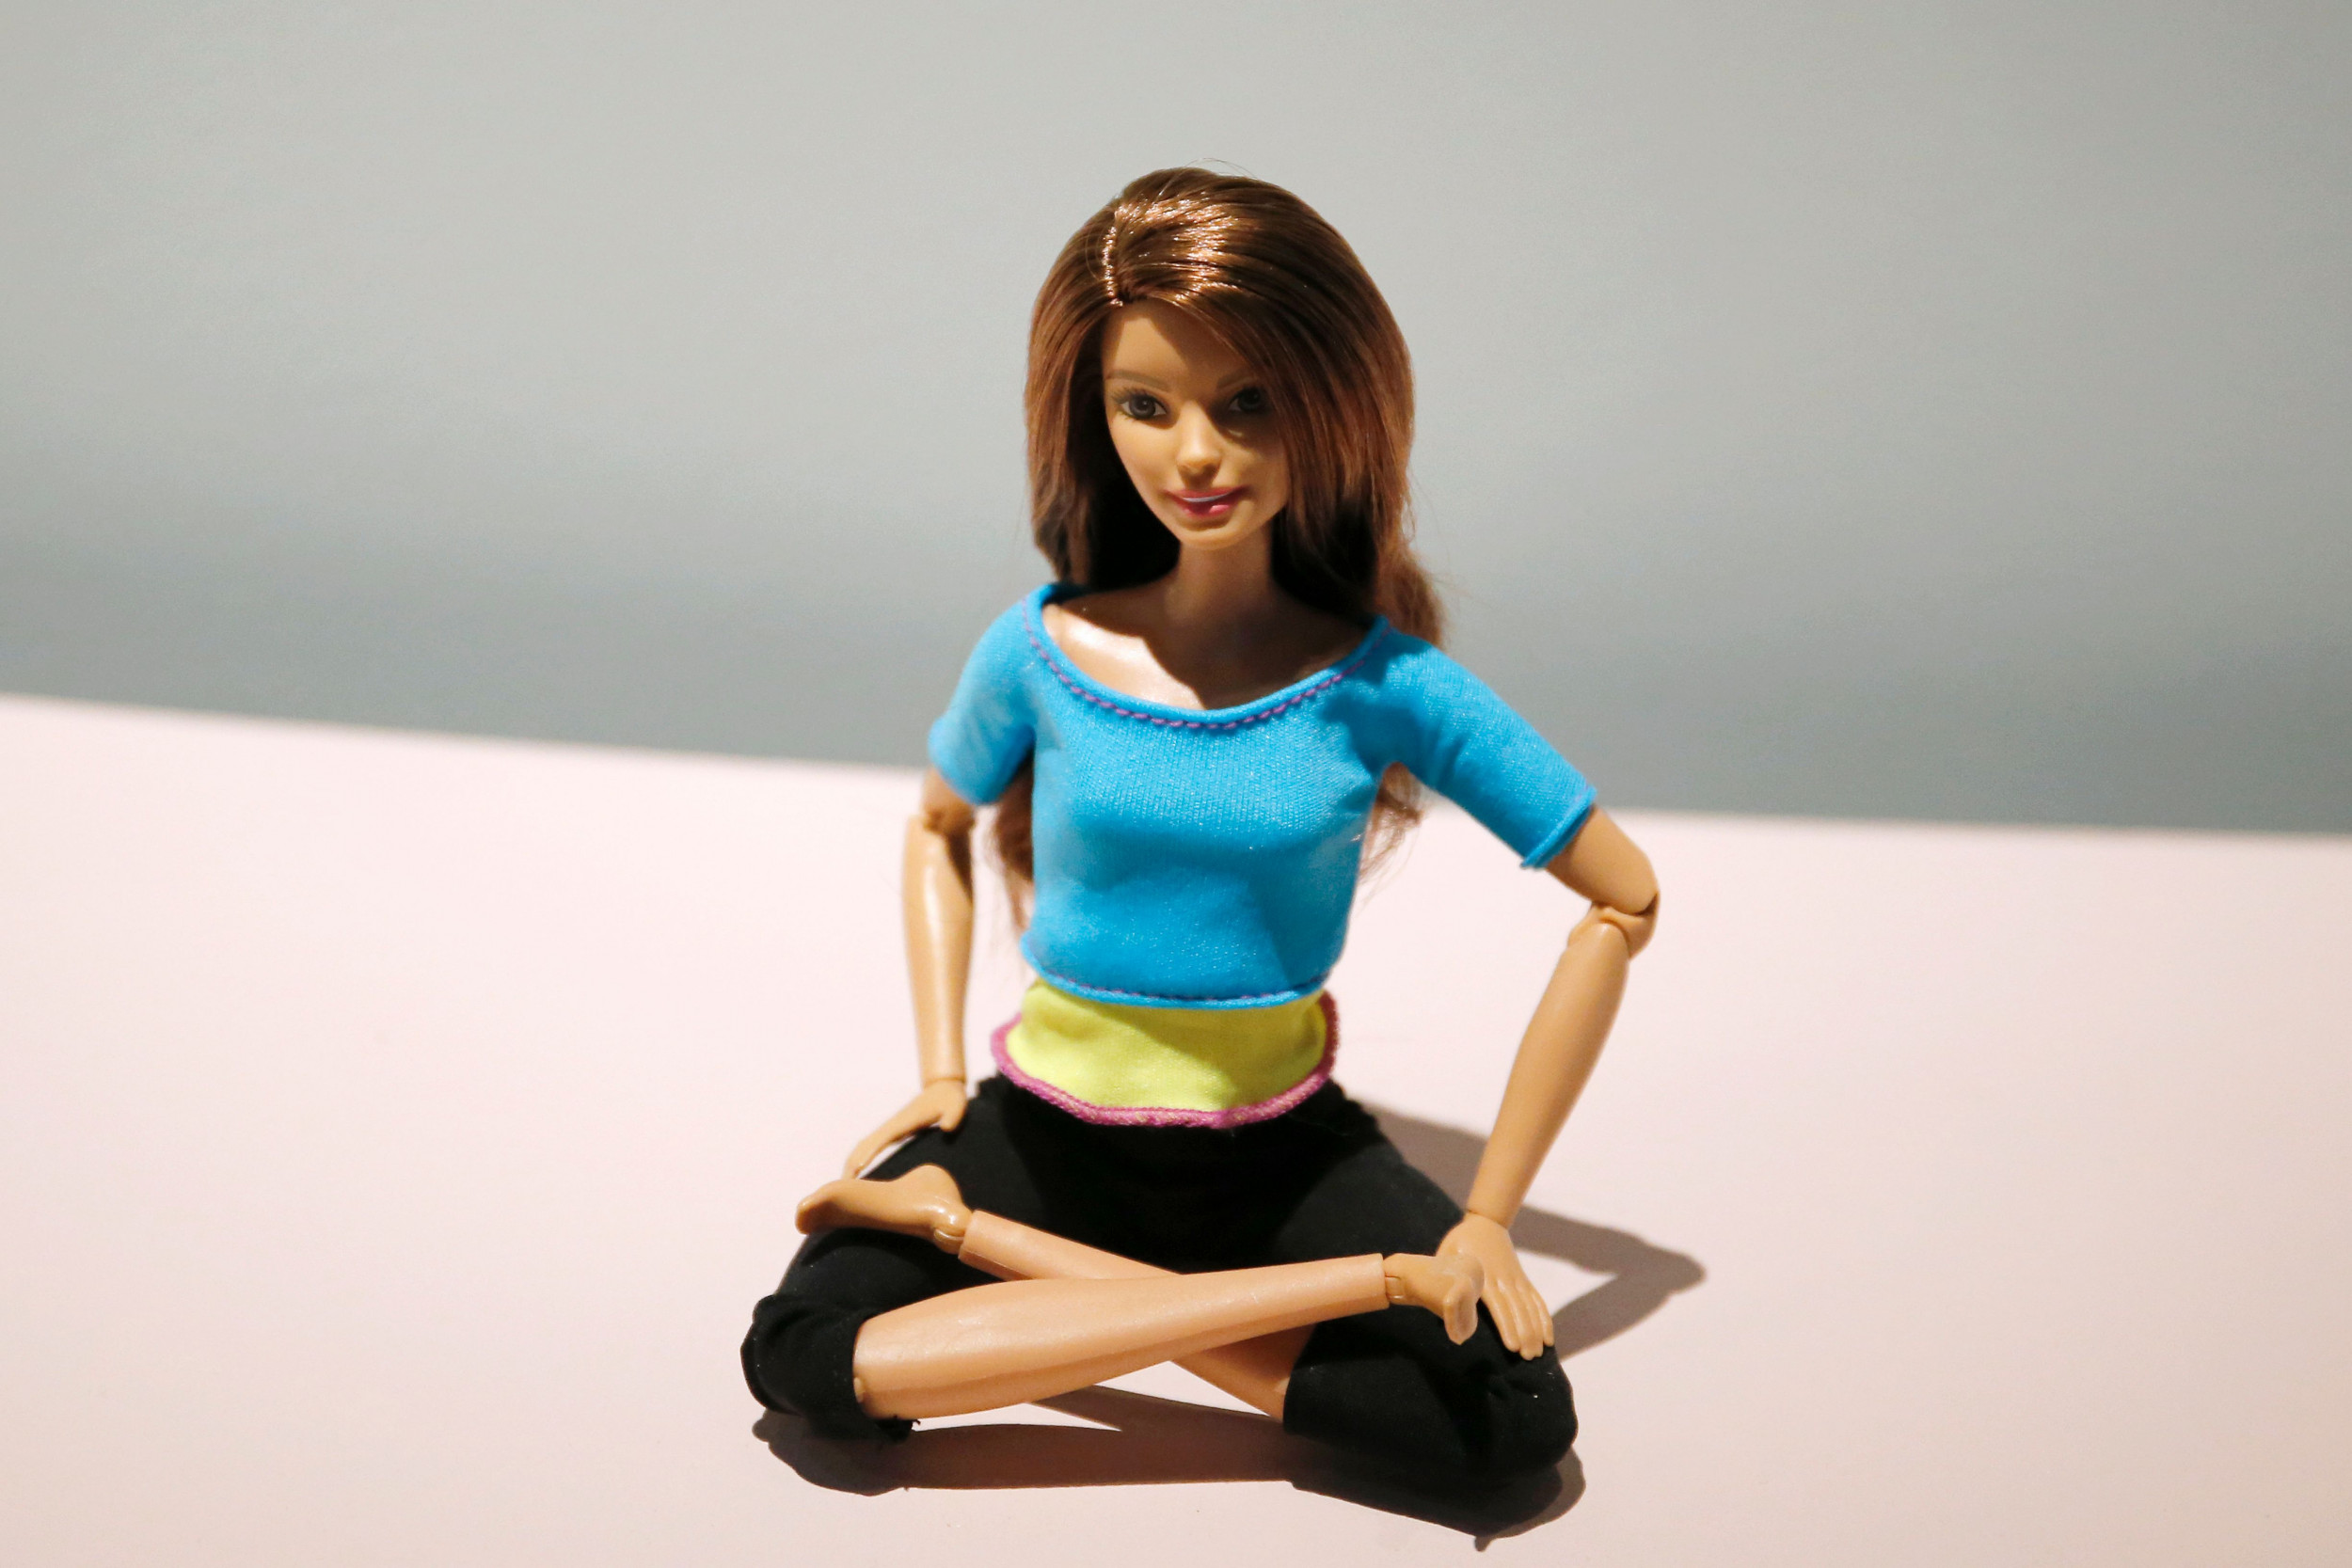 Christian Influencer Warning Yoga Barbie Will ‘Possess’ Kids Roasted Online